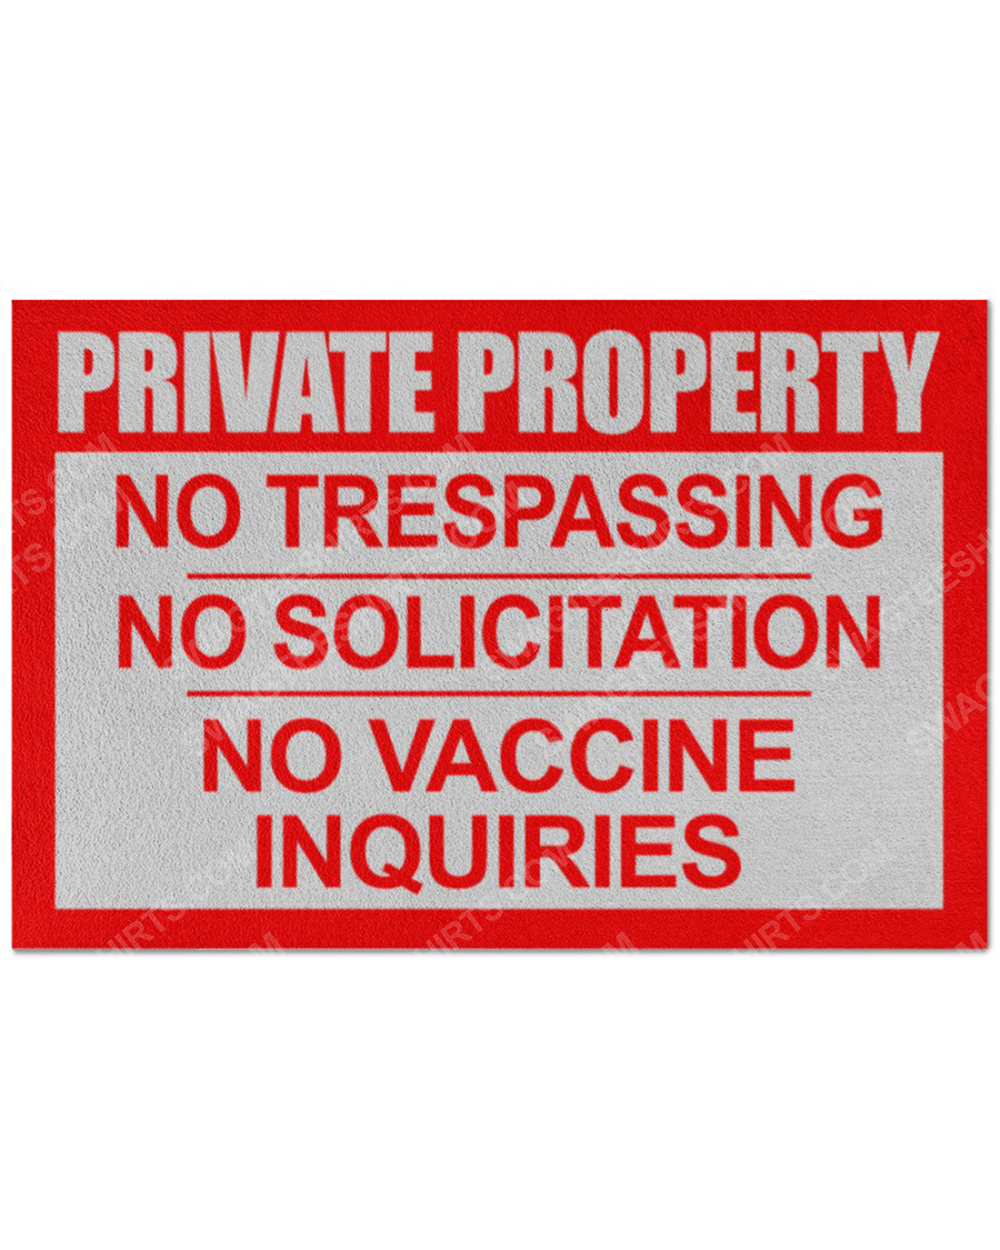 [special edition] Private property no trespassing no solicitation no inquiries doormat – maria